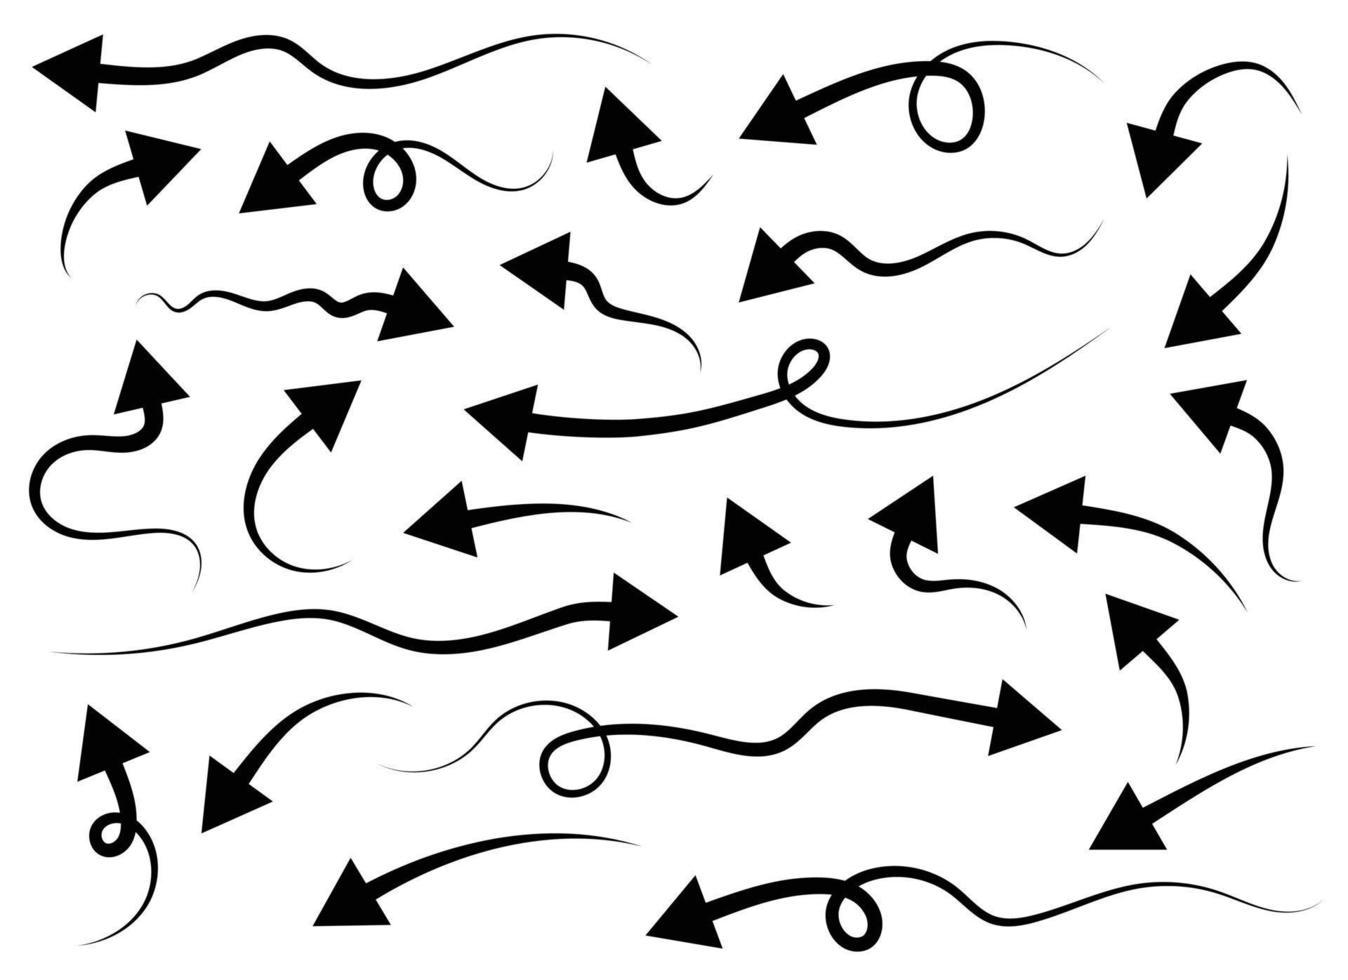 Hand drawn black curved arrow shape in doodle style. Arrow line set vector